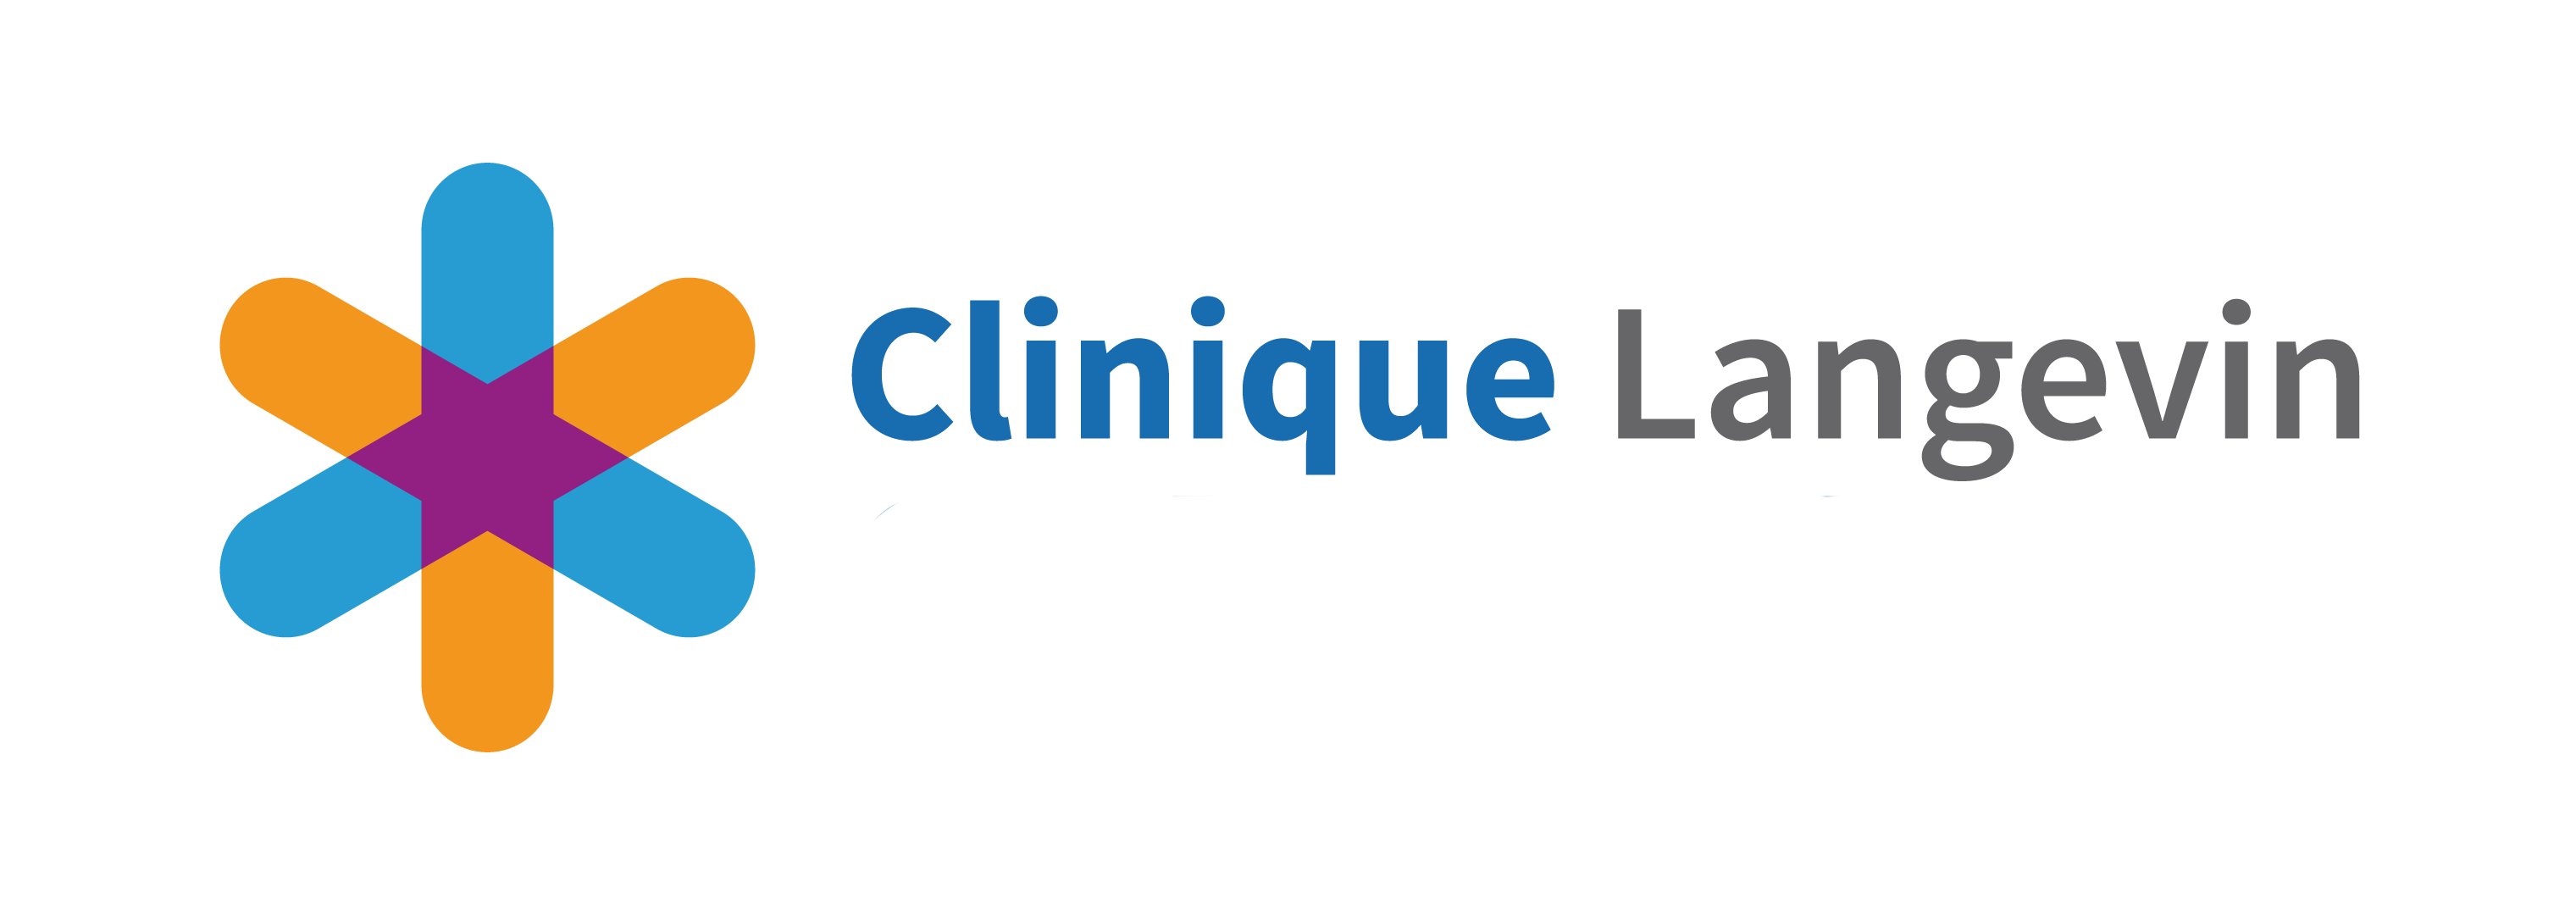 Clinique Langevin